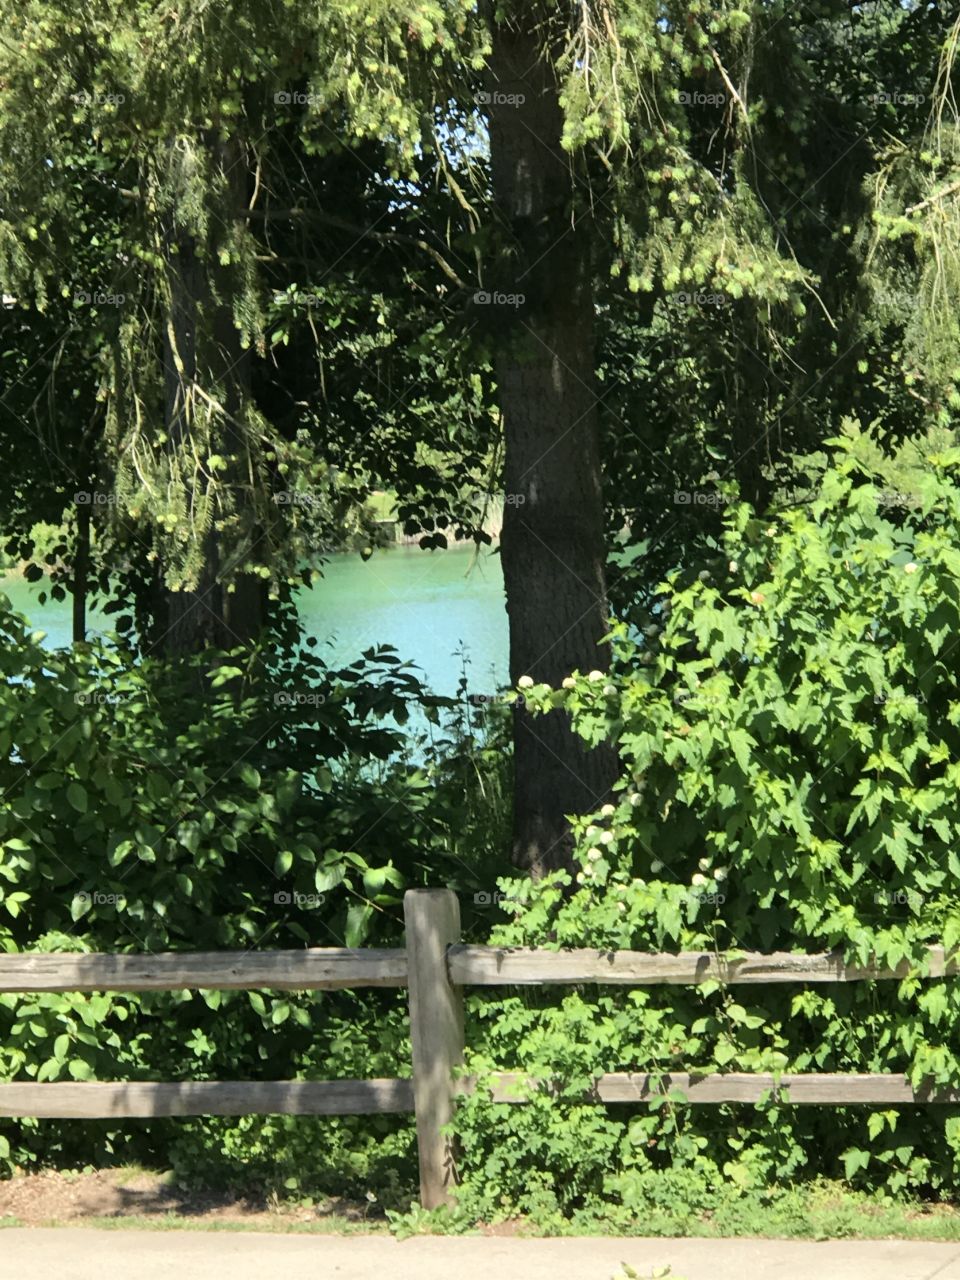 Lake view between trees
